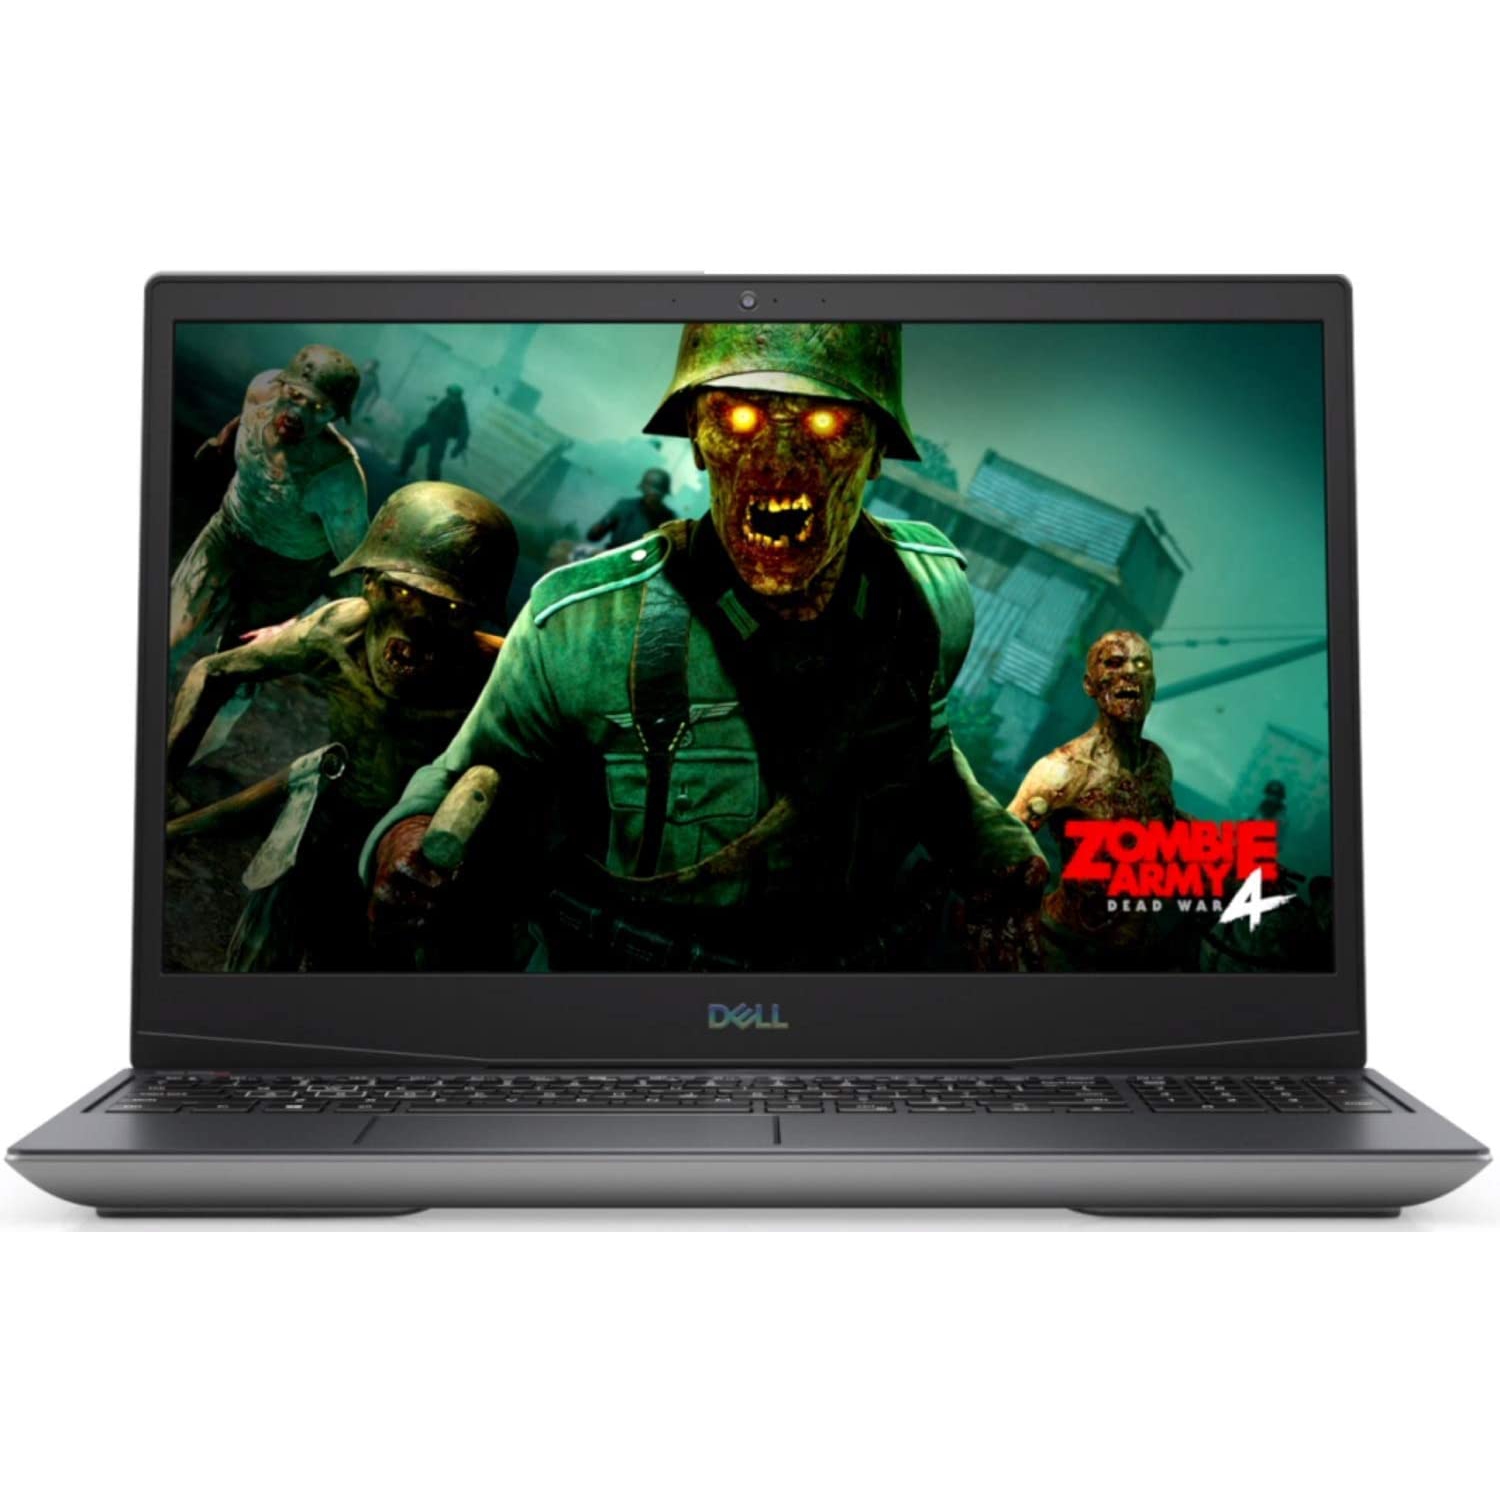 Dell G5 SE 5505 15.6" FHD Gaming Laptop (AMD Ryzen 7 4800H, 16GB RAM, 256GB SSD, Windows 10, AMD Radeon RX 5600M 6GB GDDR6) - Black Palmrest - Damaged Retail Box